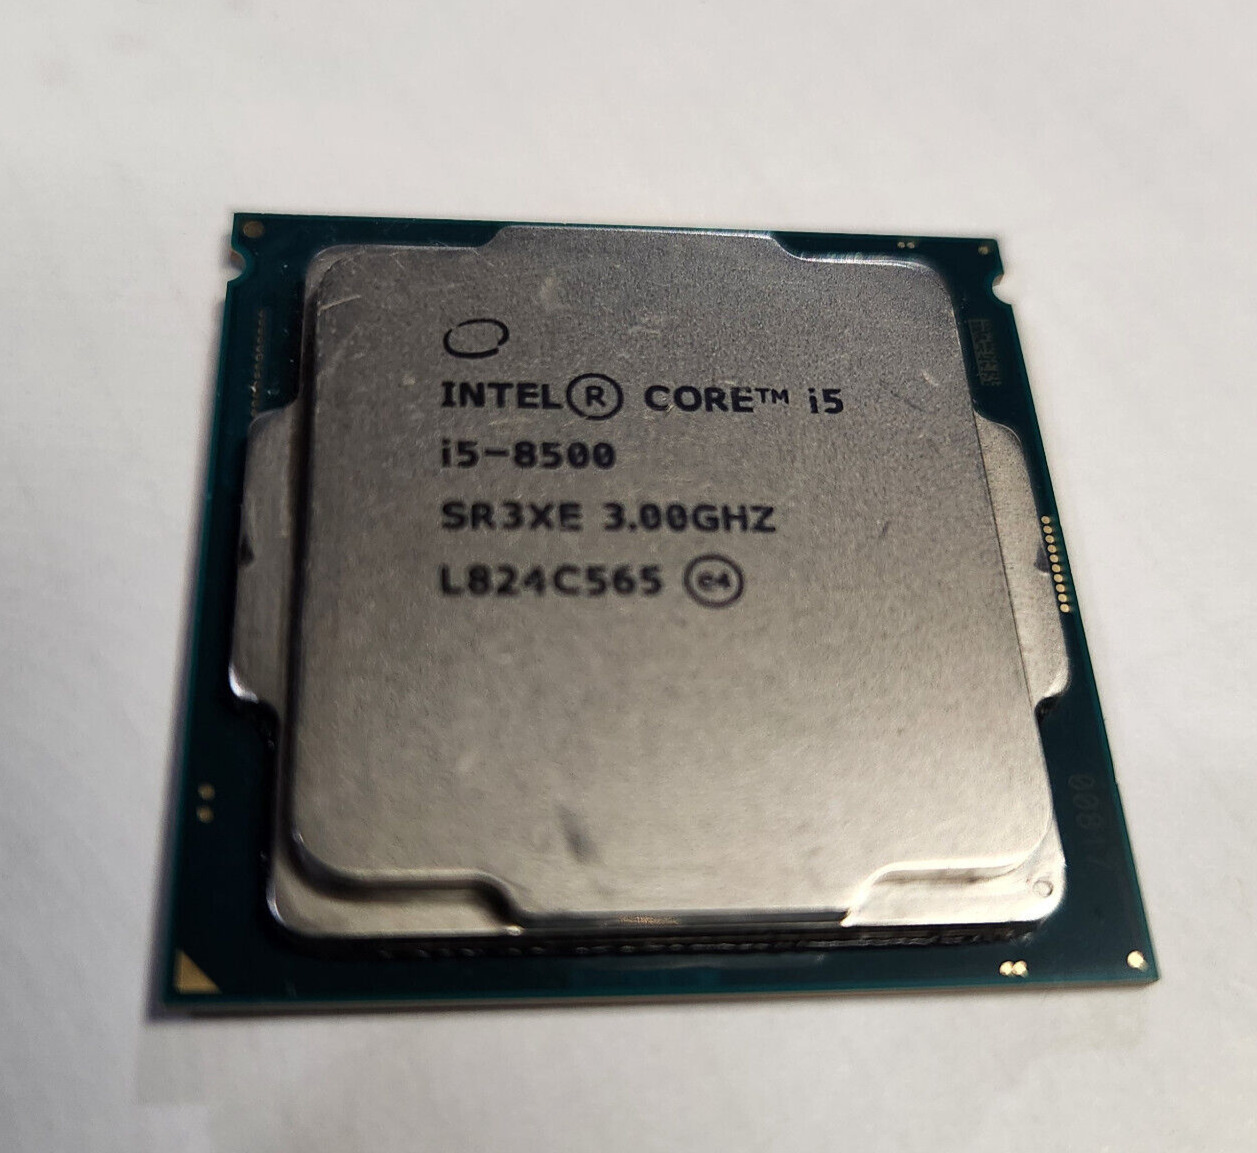 Intel Core i5-8500 Six Core CPU Processor 3.00GHz LGA1151 SR3XE *TESTED*